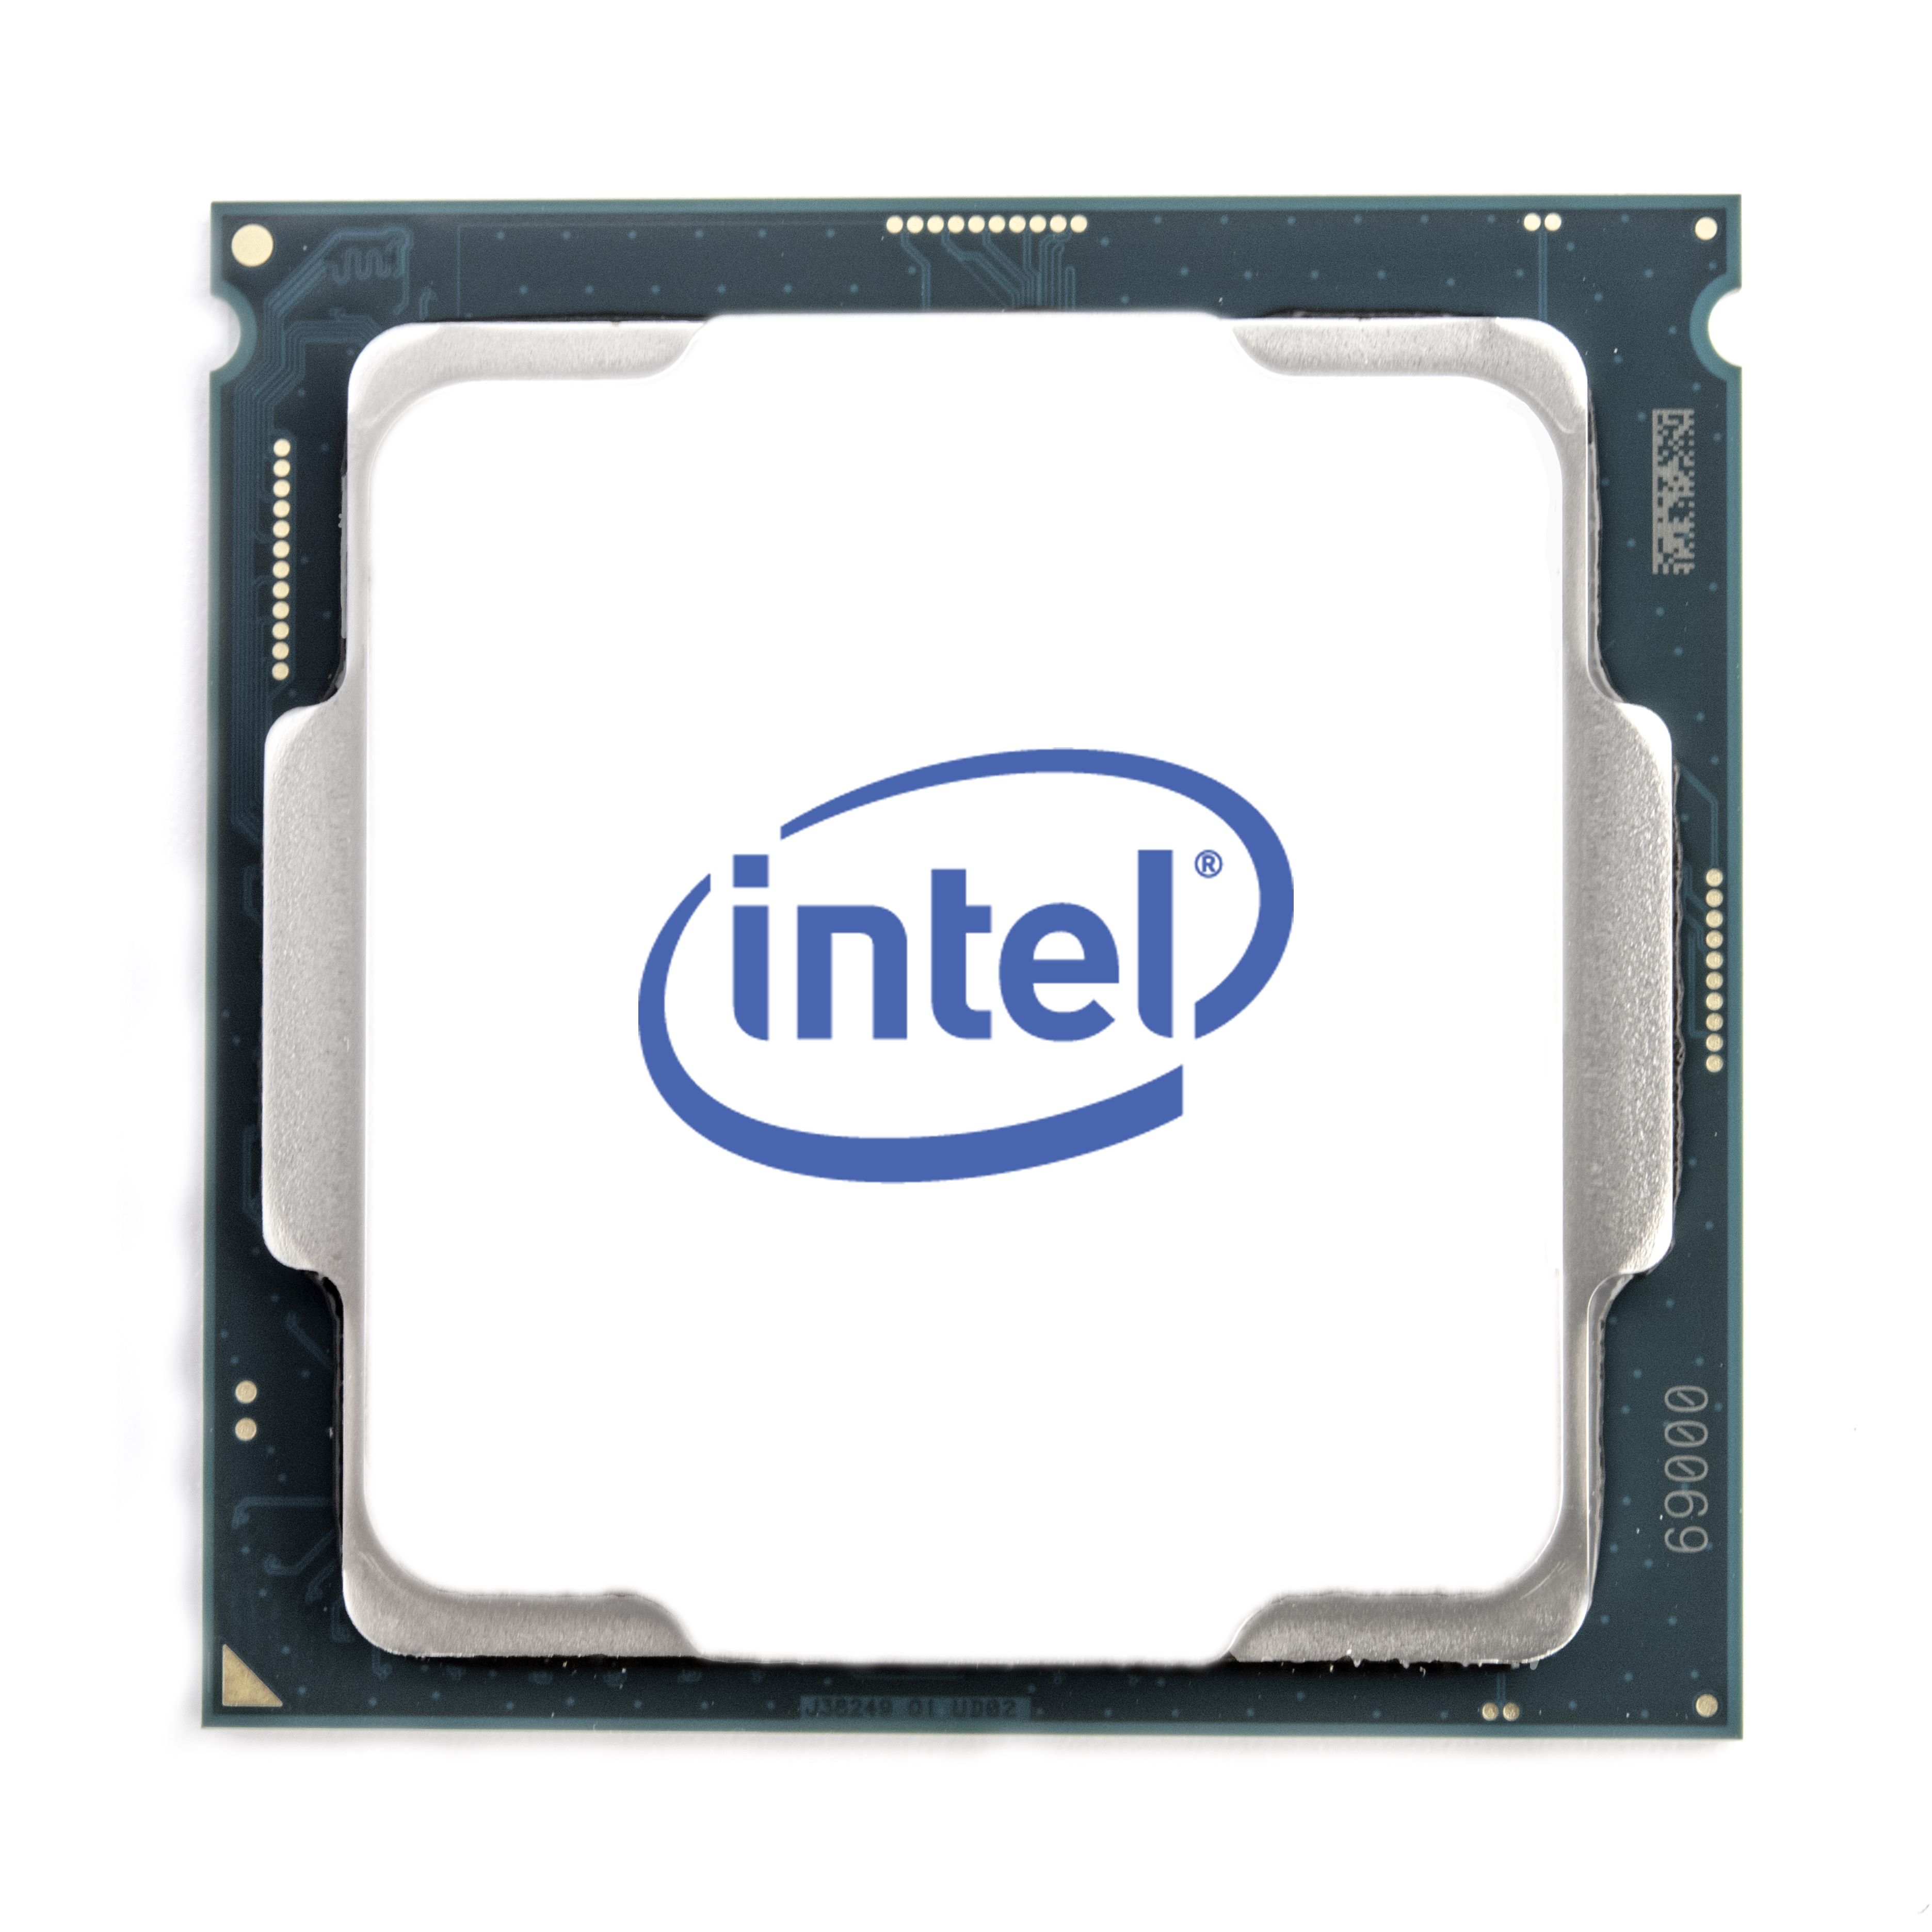 Intel Xeon Gold 5220R - 2.2 GHz - 24 Kerne - 48 Threads